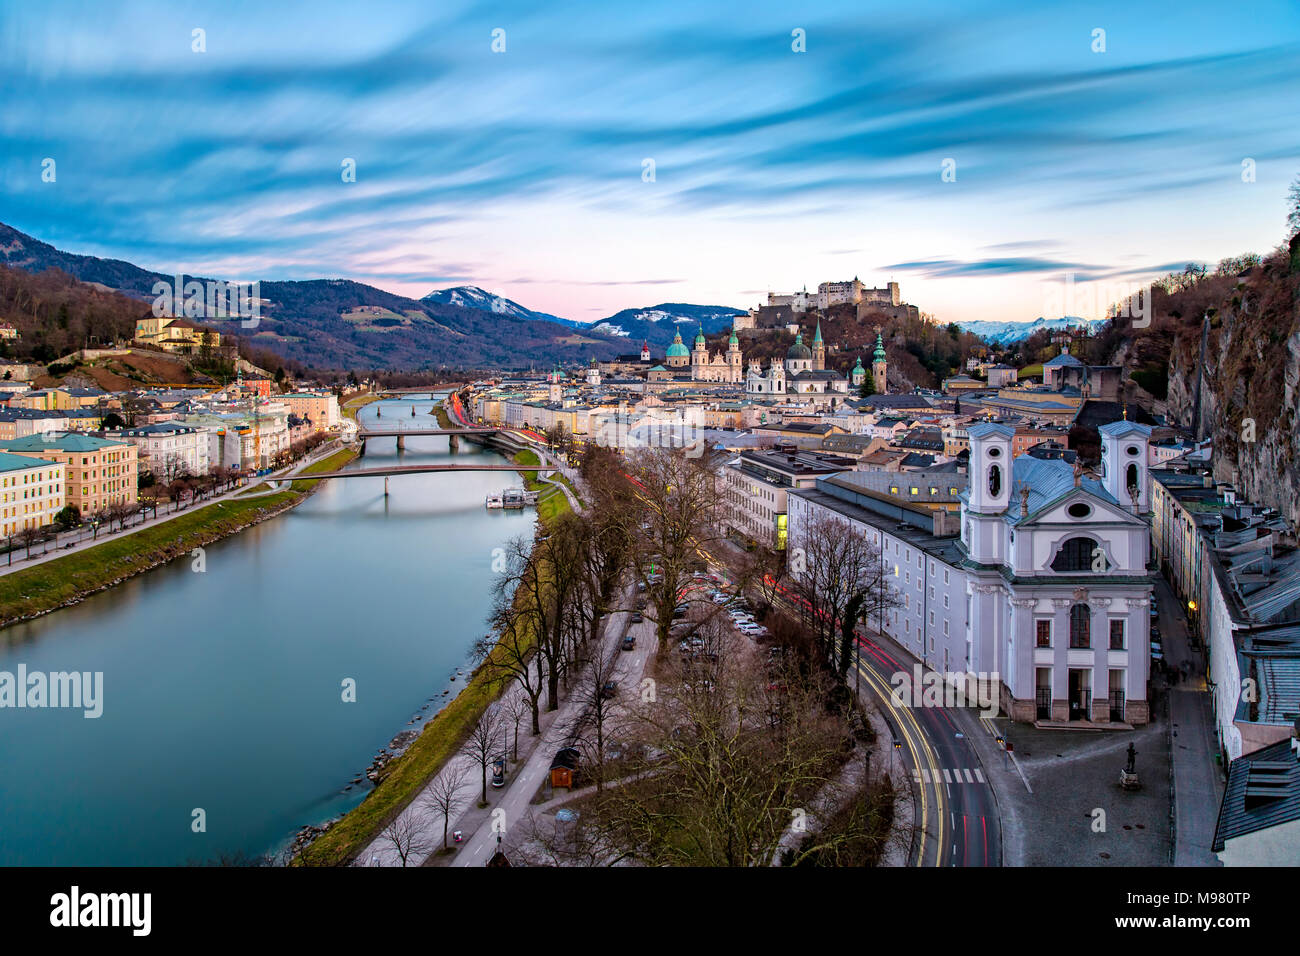 Austria, Salzburg State, Salzburg, Old town, river Salzach and Hohensalzburg Castle Stock Photo